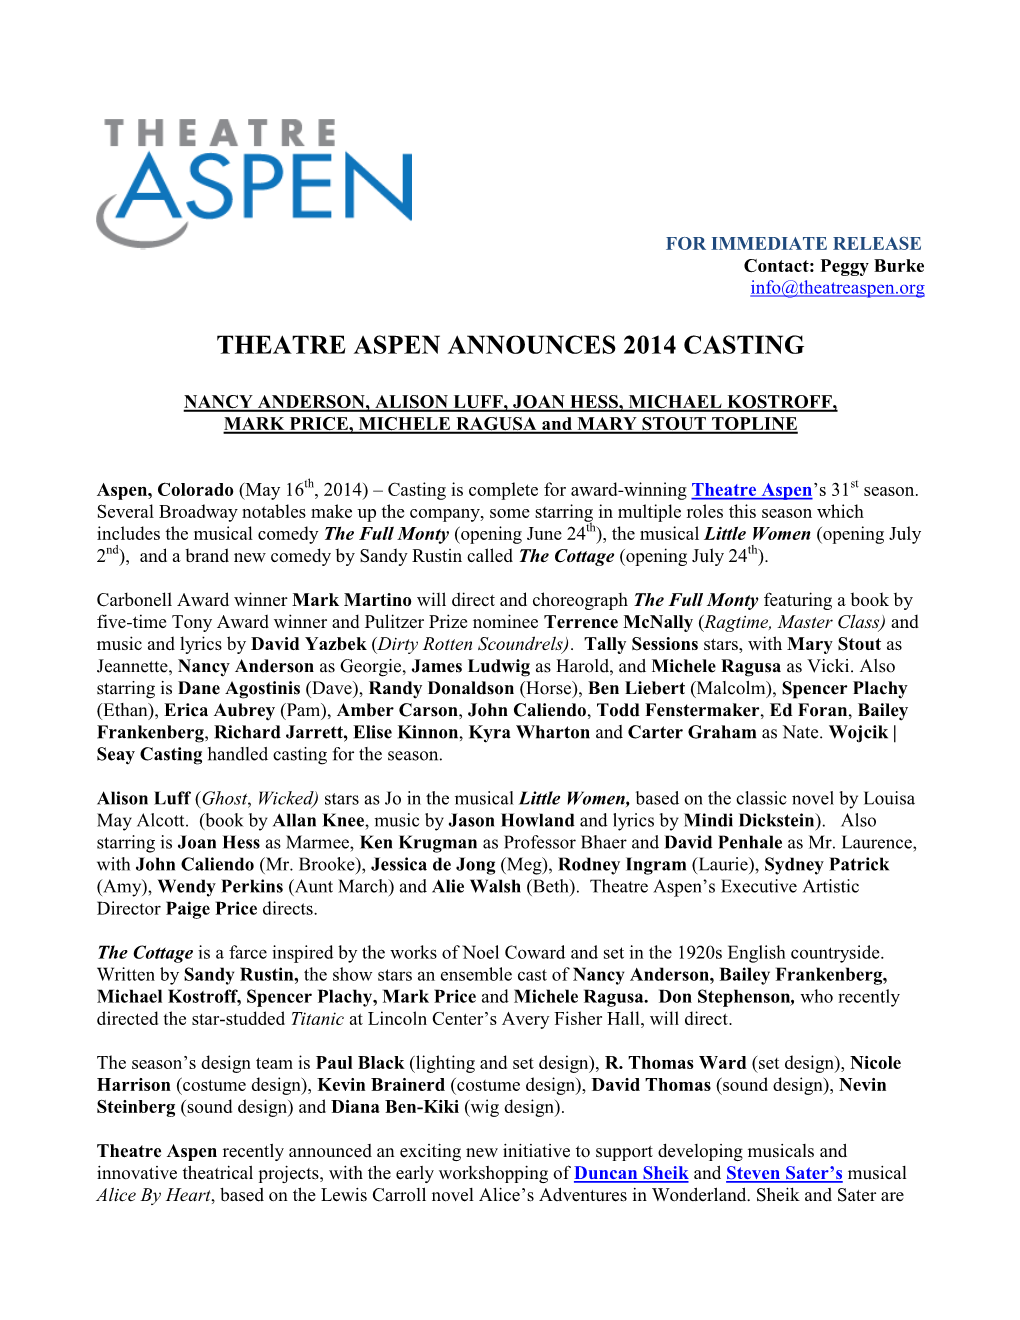 Theatre Aspen Announces 2014 Casting